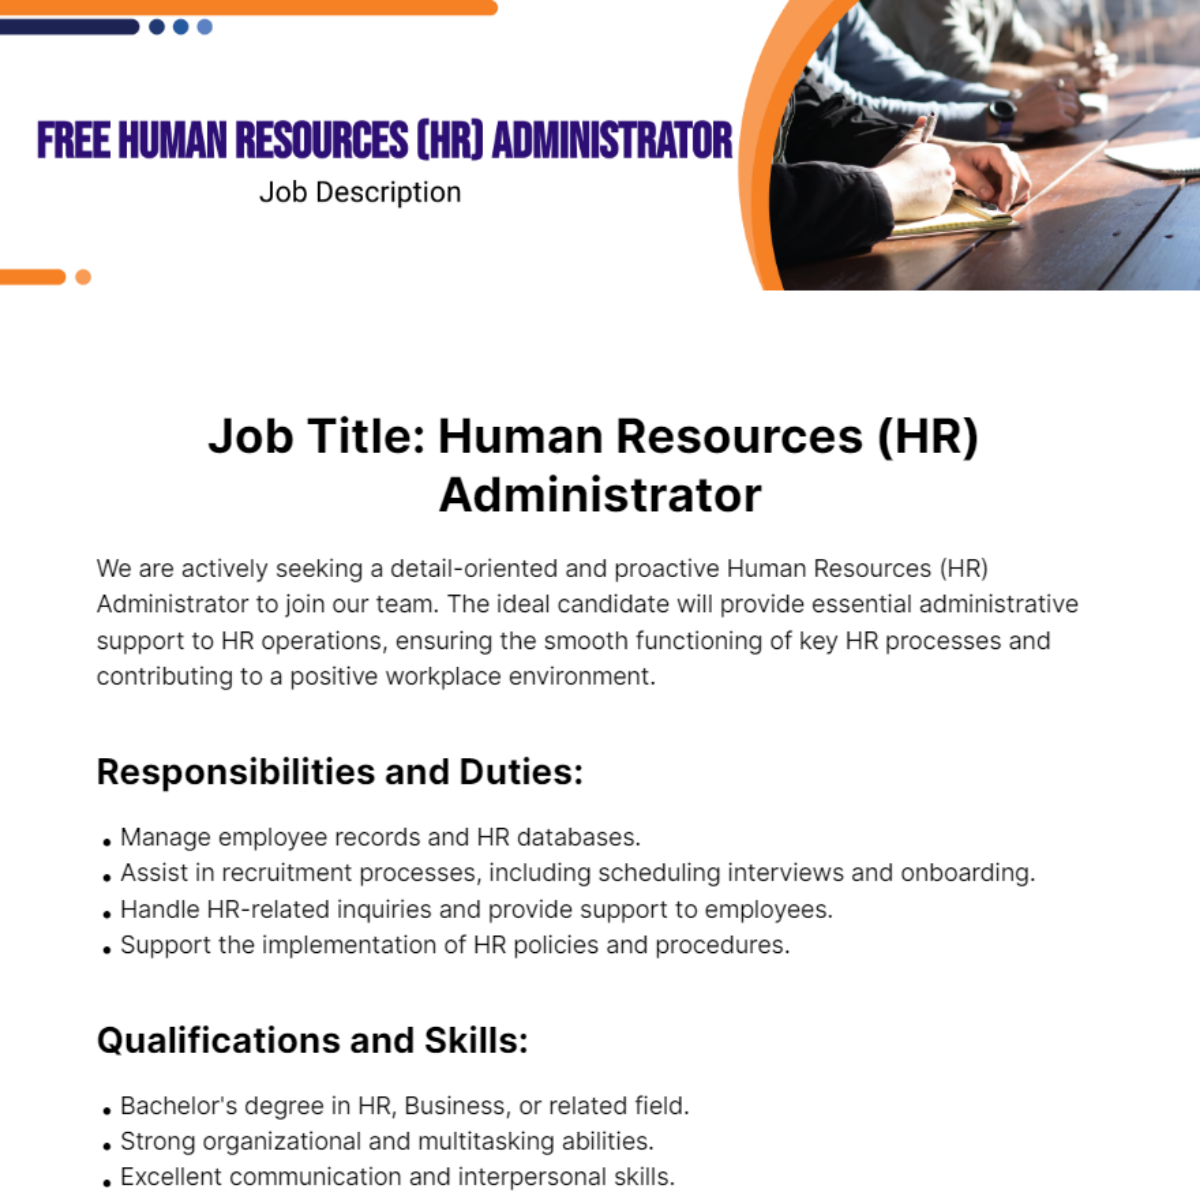 Human Resources (HR) Administrator Job Description Template